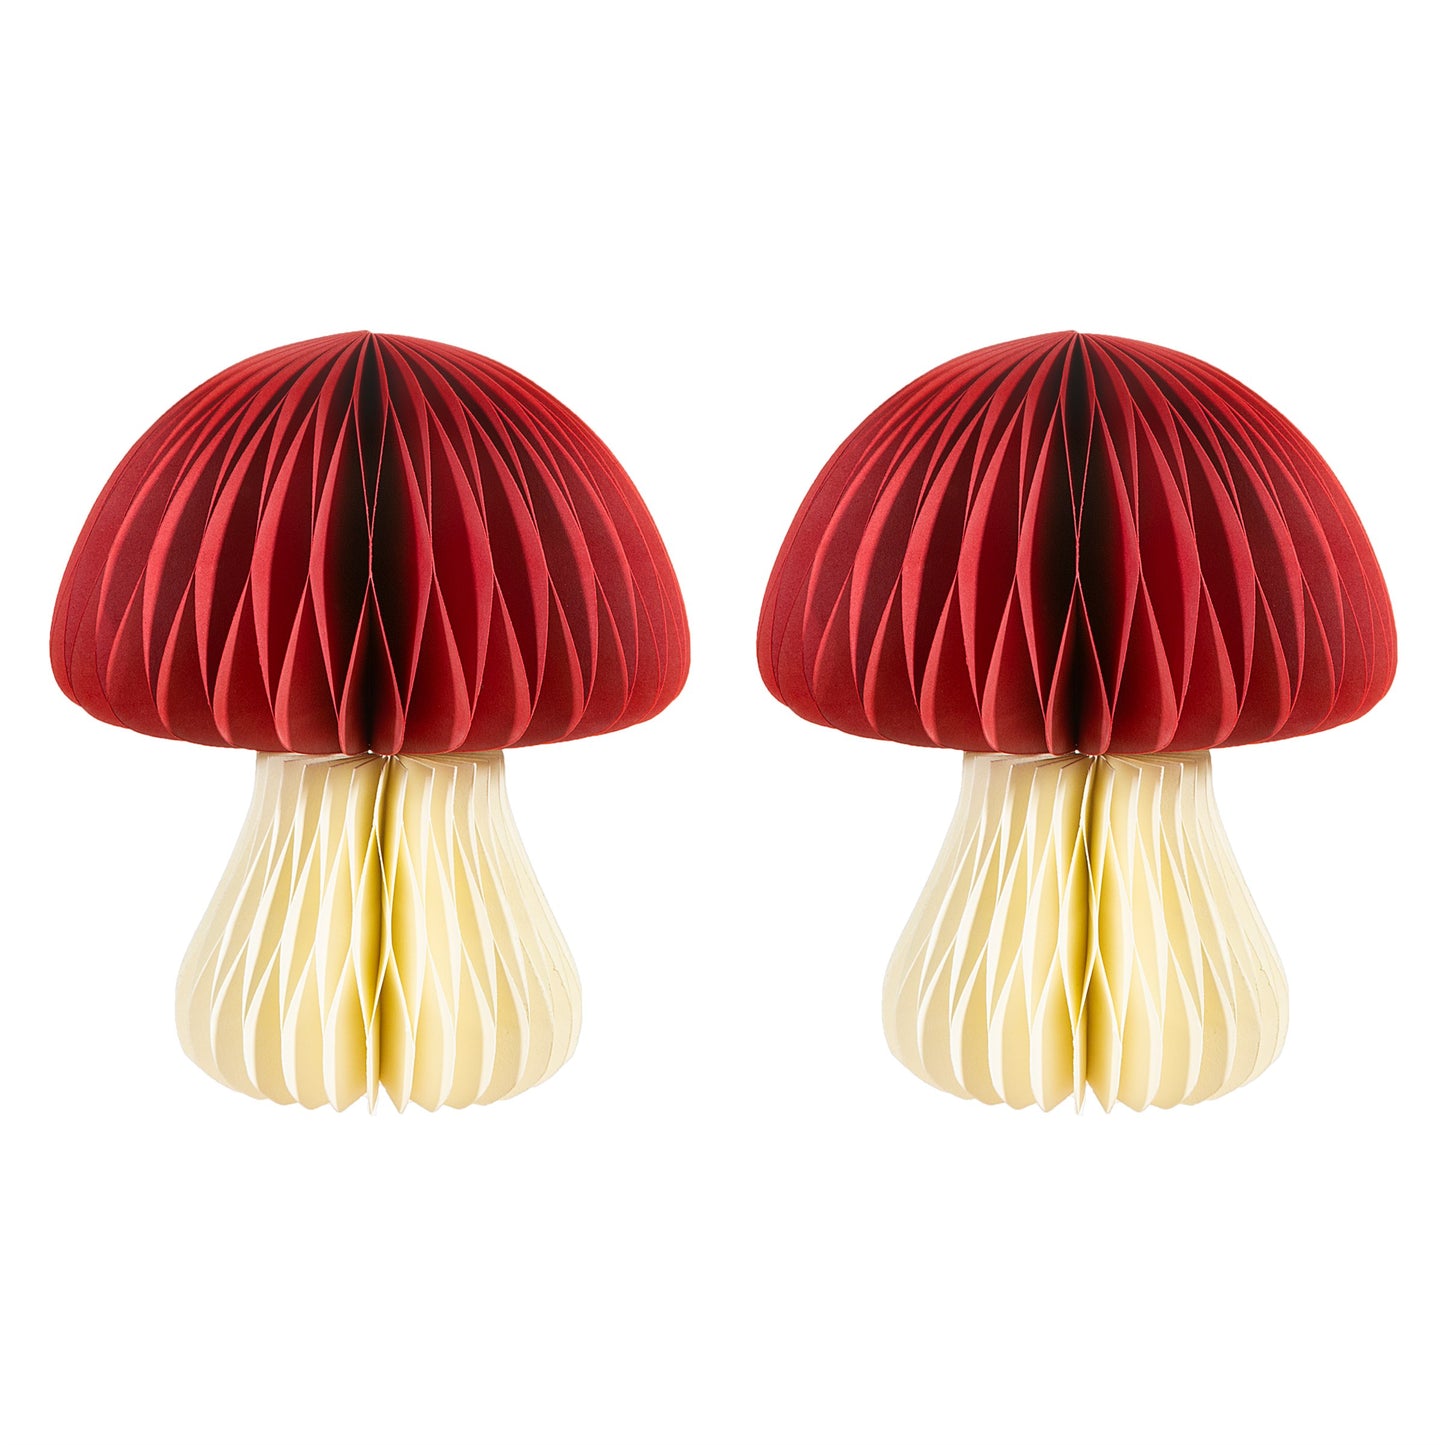 Sass & Belle - Honeycomb Paper Mushroom Standing Decorations - Set of 2